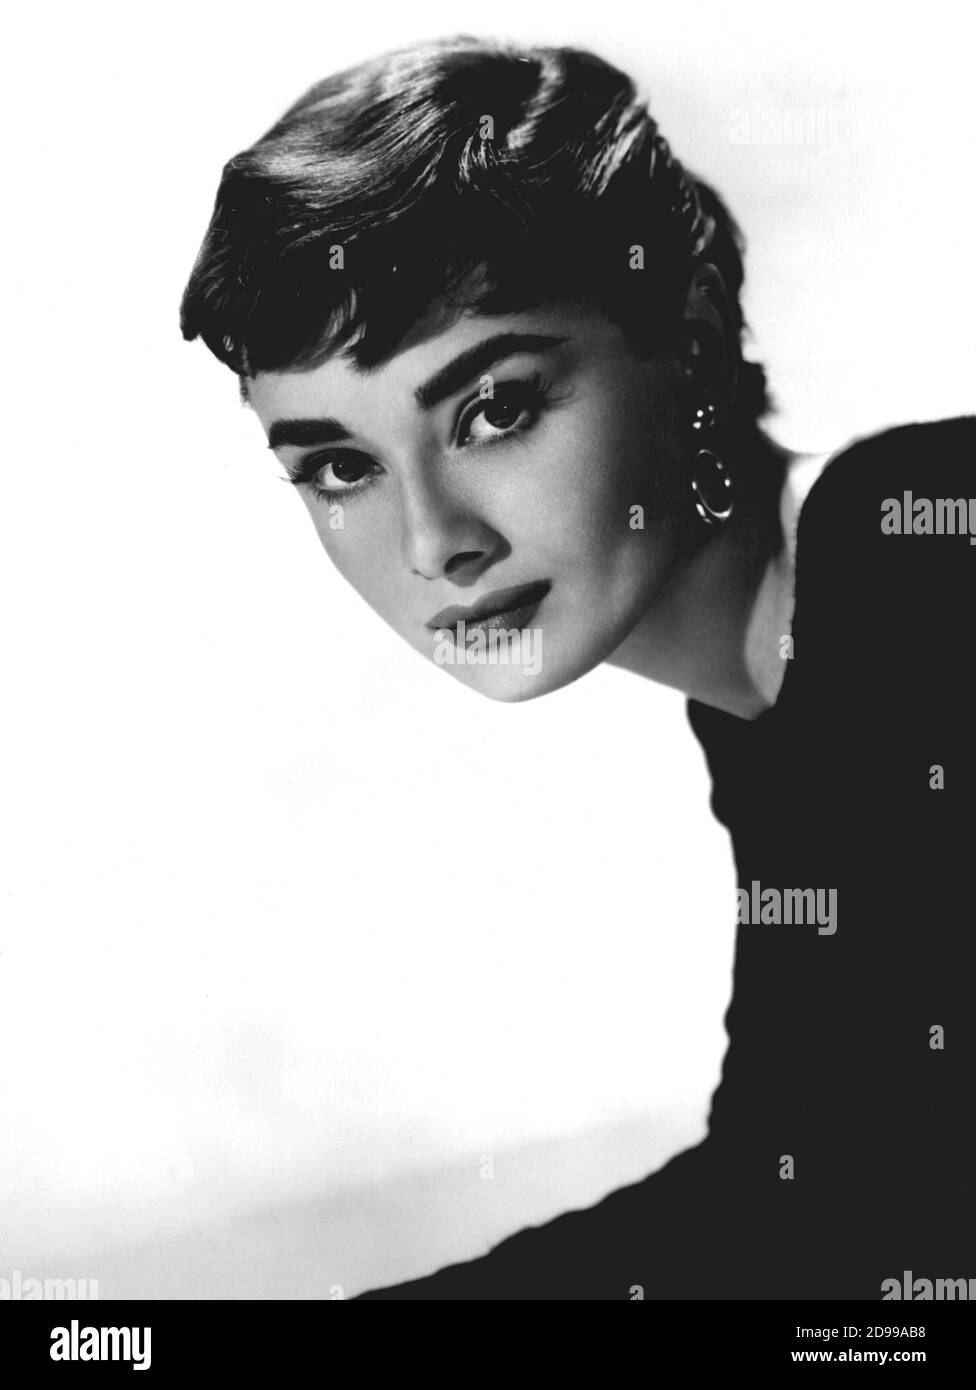 1954 :The movie actress AUDREY HEPBURN in SABRINA by Billy Wilder - COMEDY  - gioiello - gioielli - jewel - jewellery - jewels - orecchino - orecchini  - eardrops - earrings - -